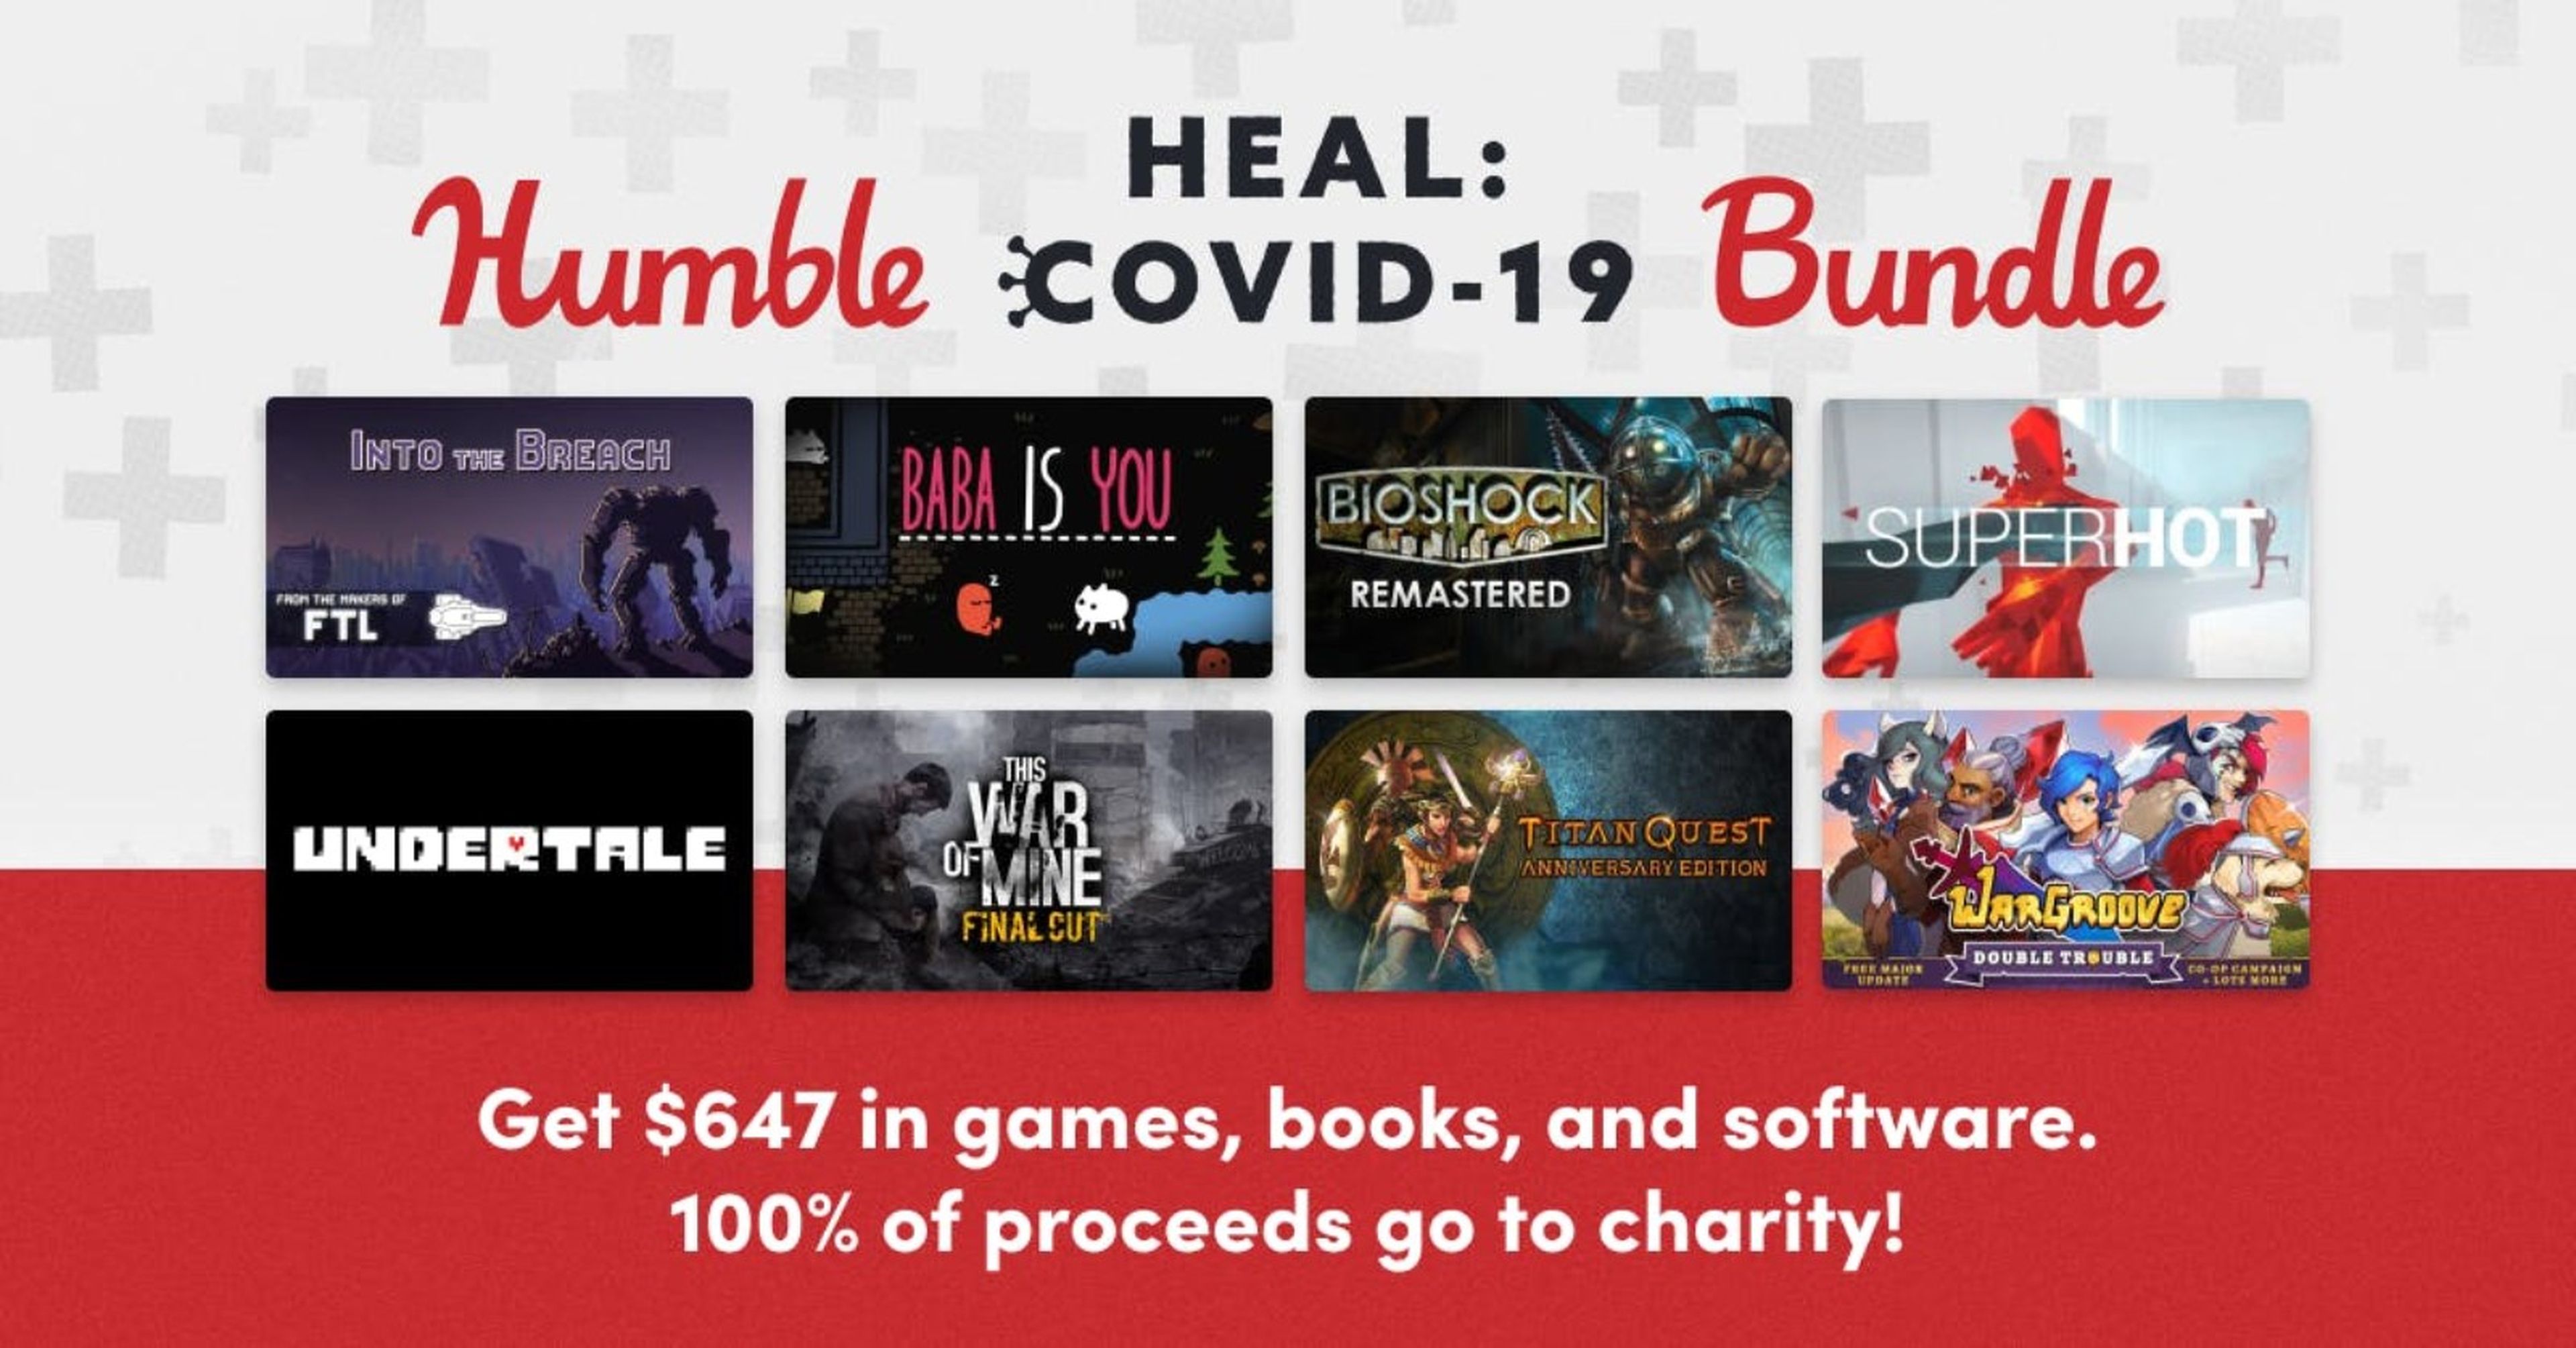 Humble Bundle - Heal: Covid-19 Bundle